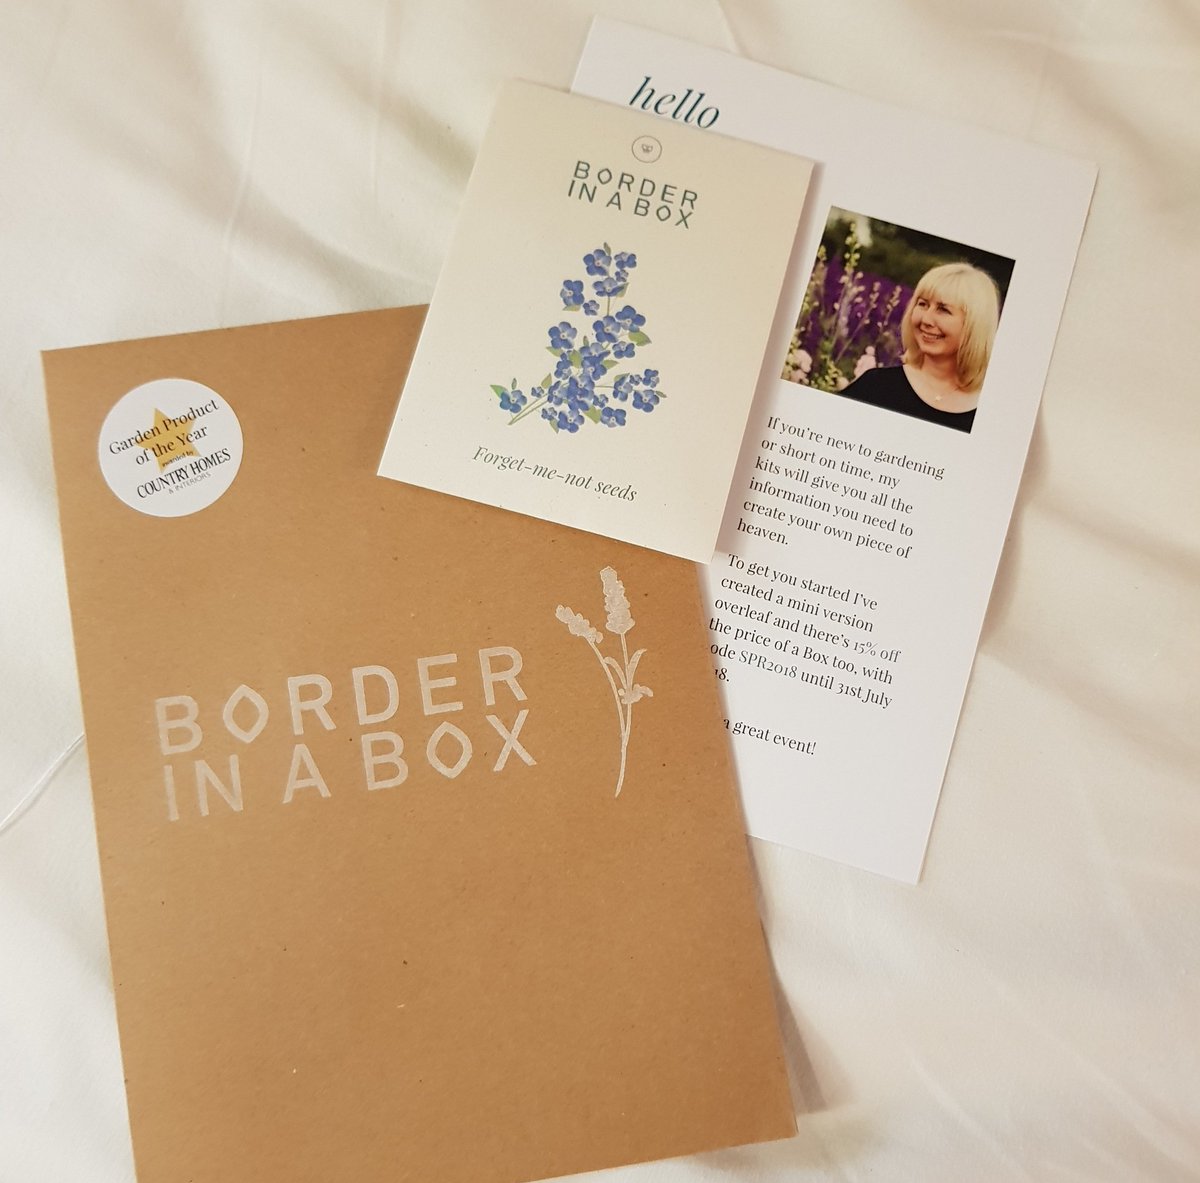 Fab goodie bag gift from award winning garden designer @borderinabox #MIL2018